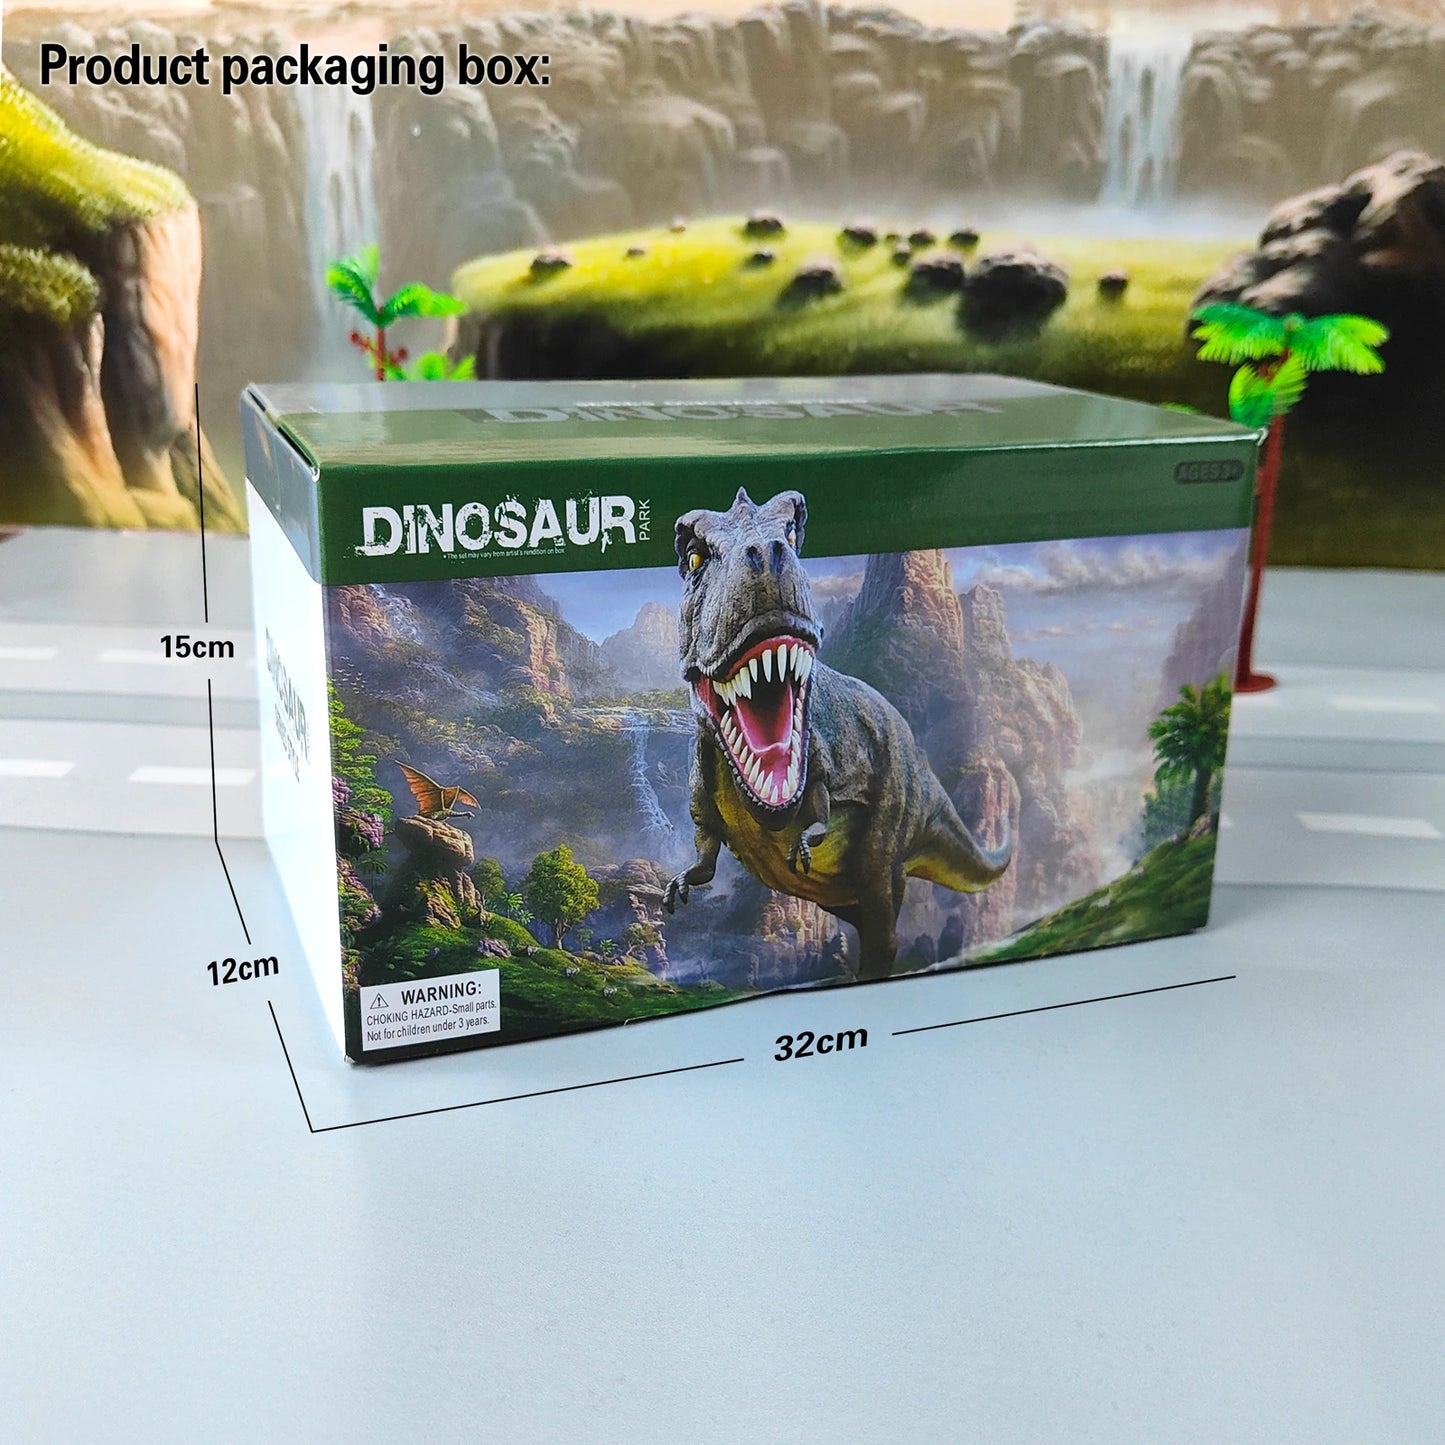 139-Piece Dinosaur World Climbing Track Toy Set - Flexible Road Race Playset with Dinosaur Cars for Boys